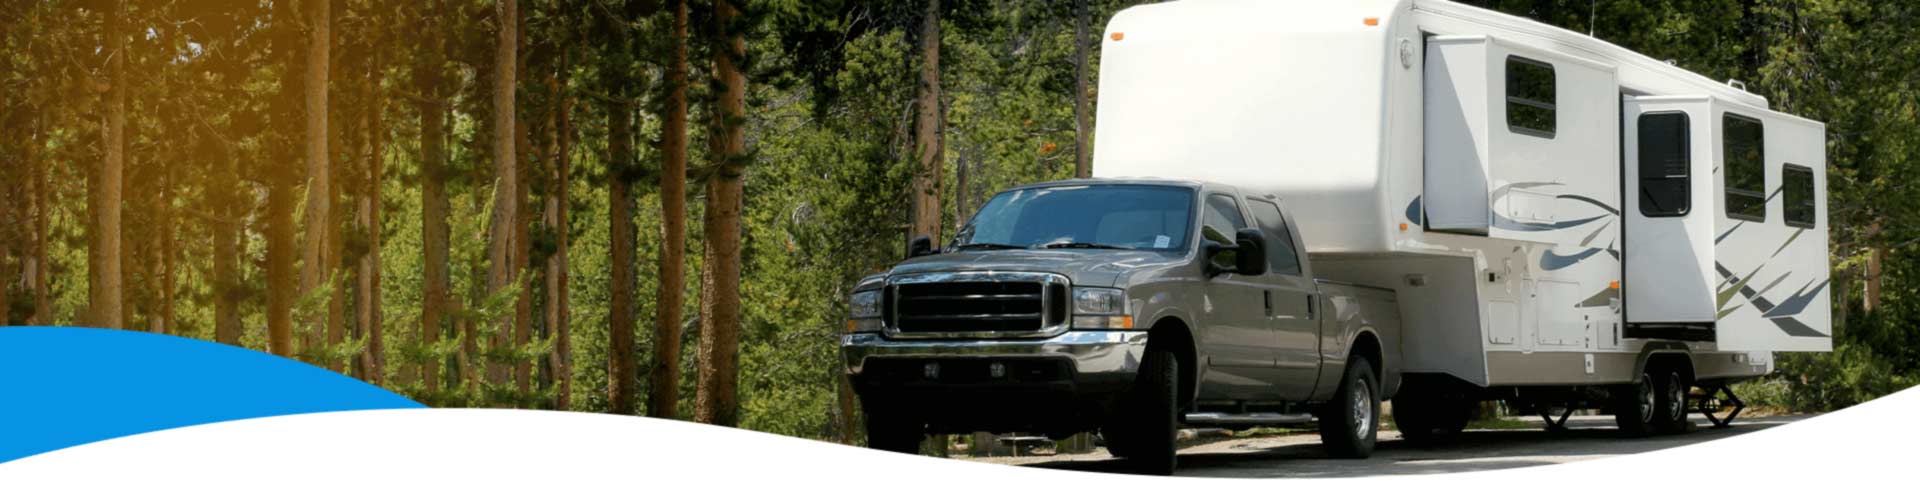 rv travel trailer loans